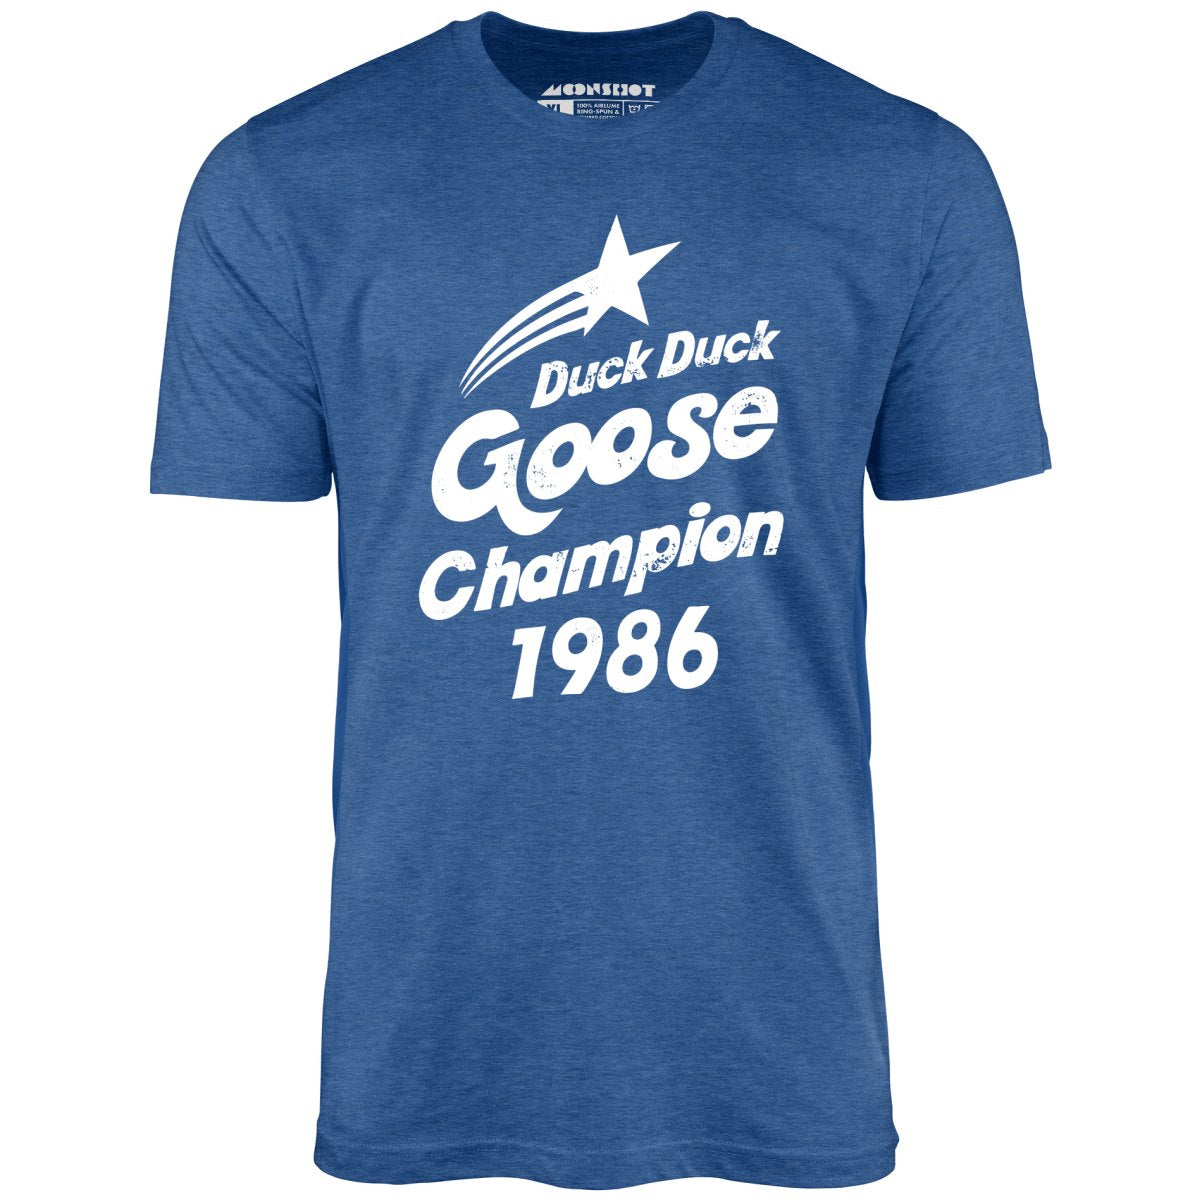 Duck Duck Goose Champion 1986 - Unisex T-Shirt